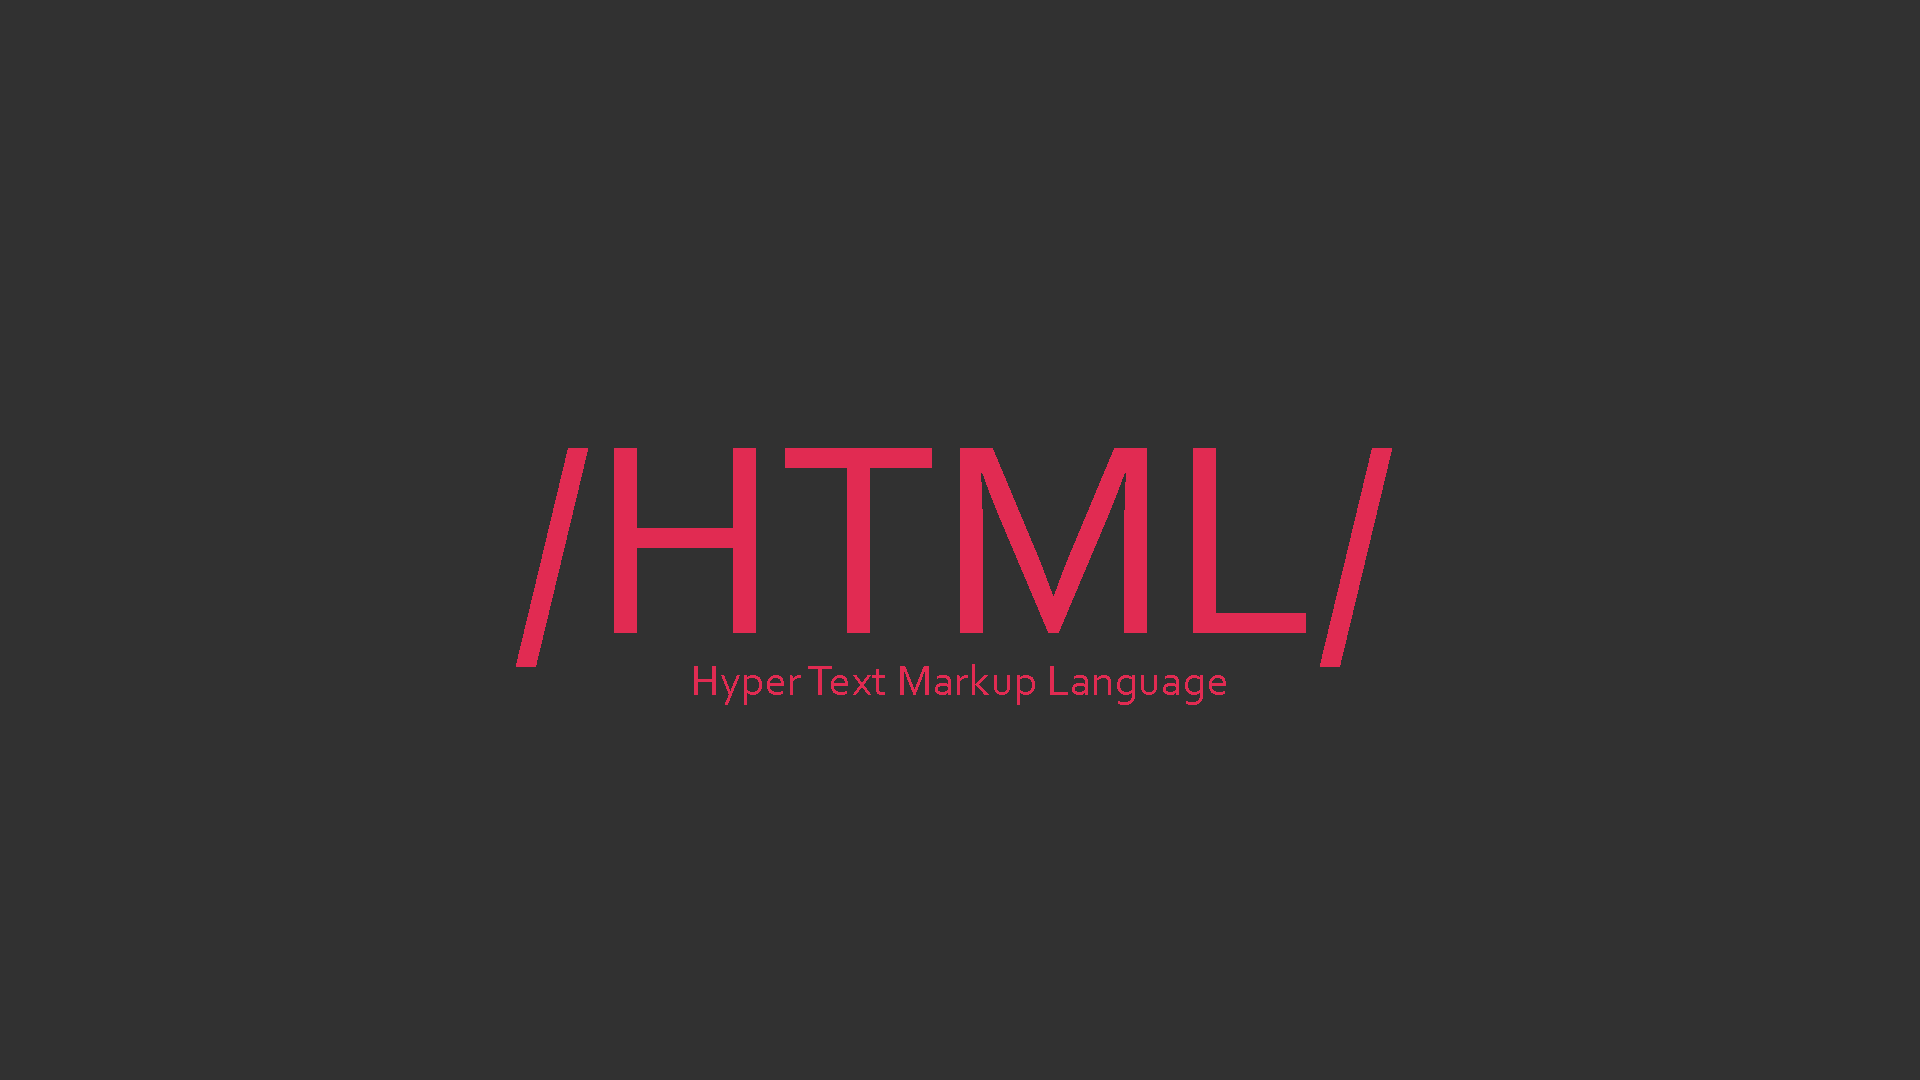 Code Web Development Development HTML Typography Red Simple Background Black Background 1920x1080